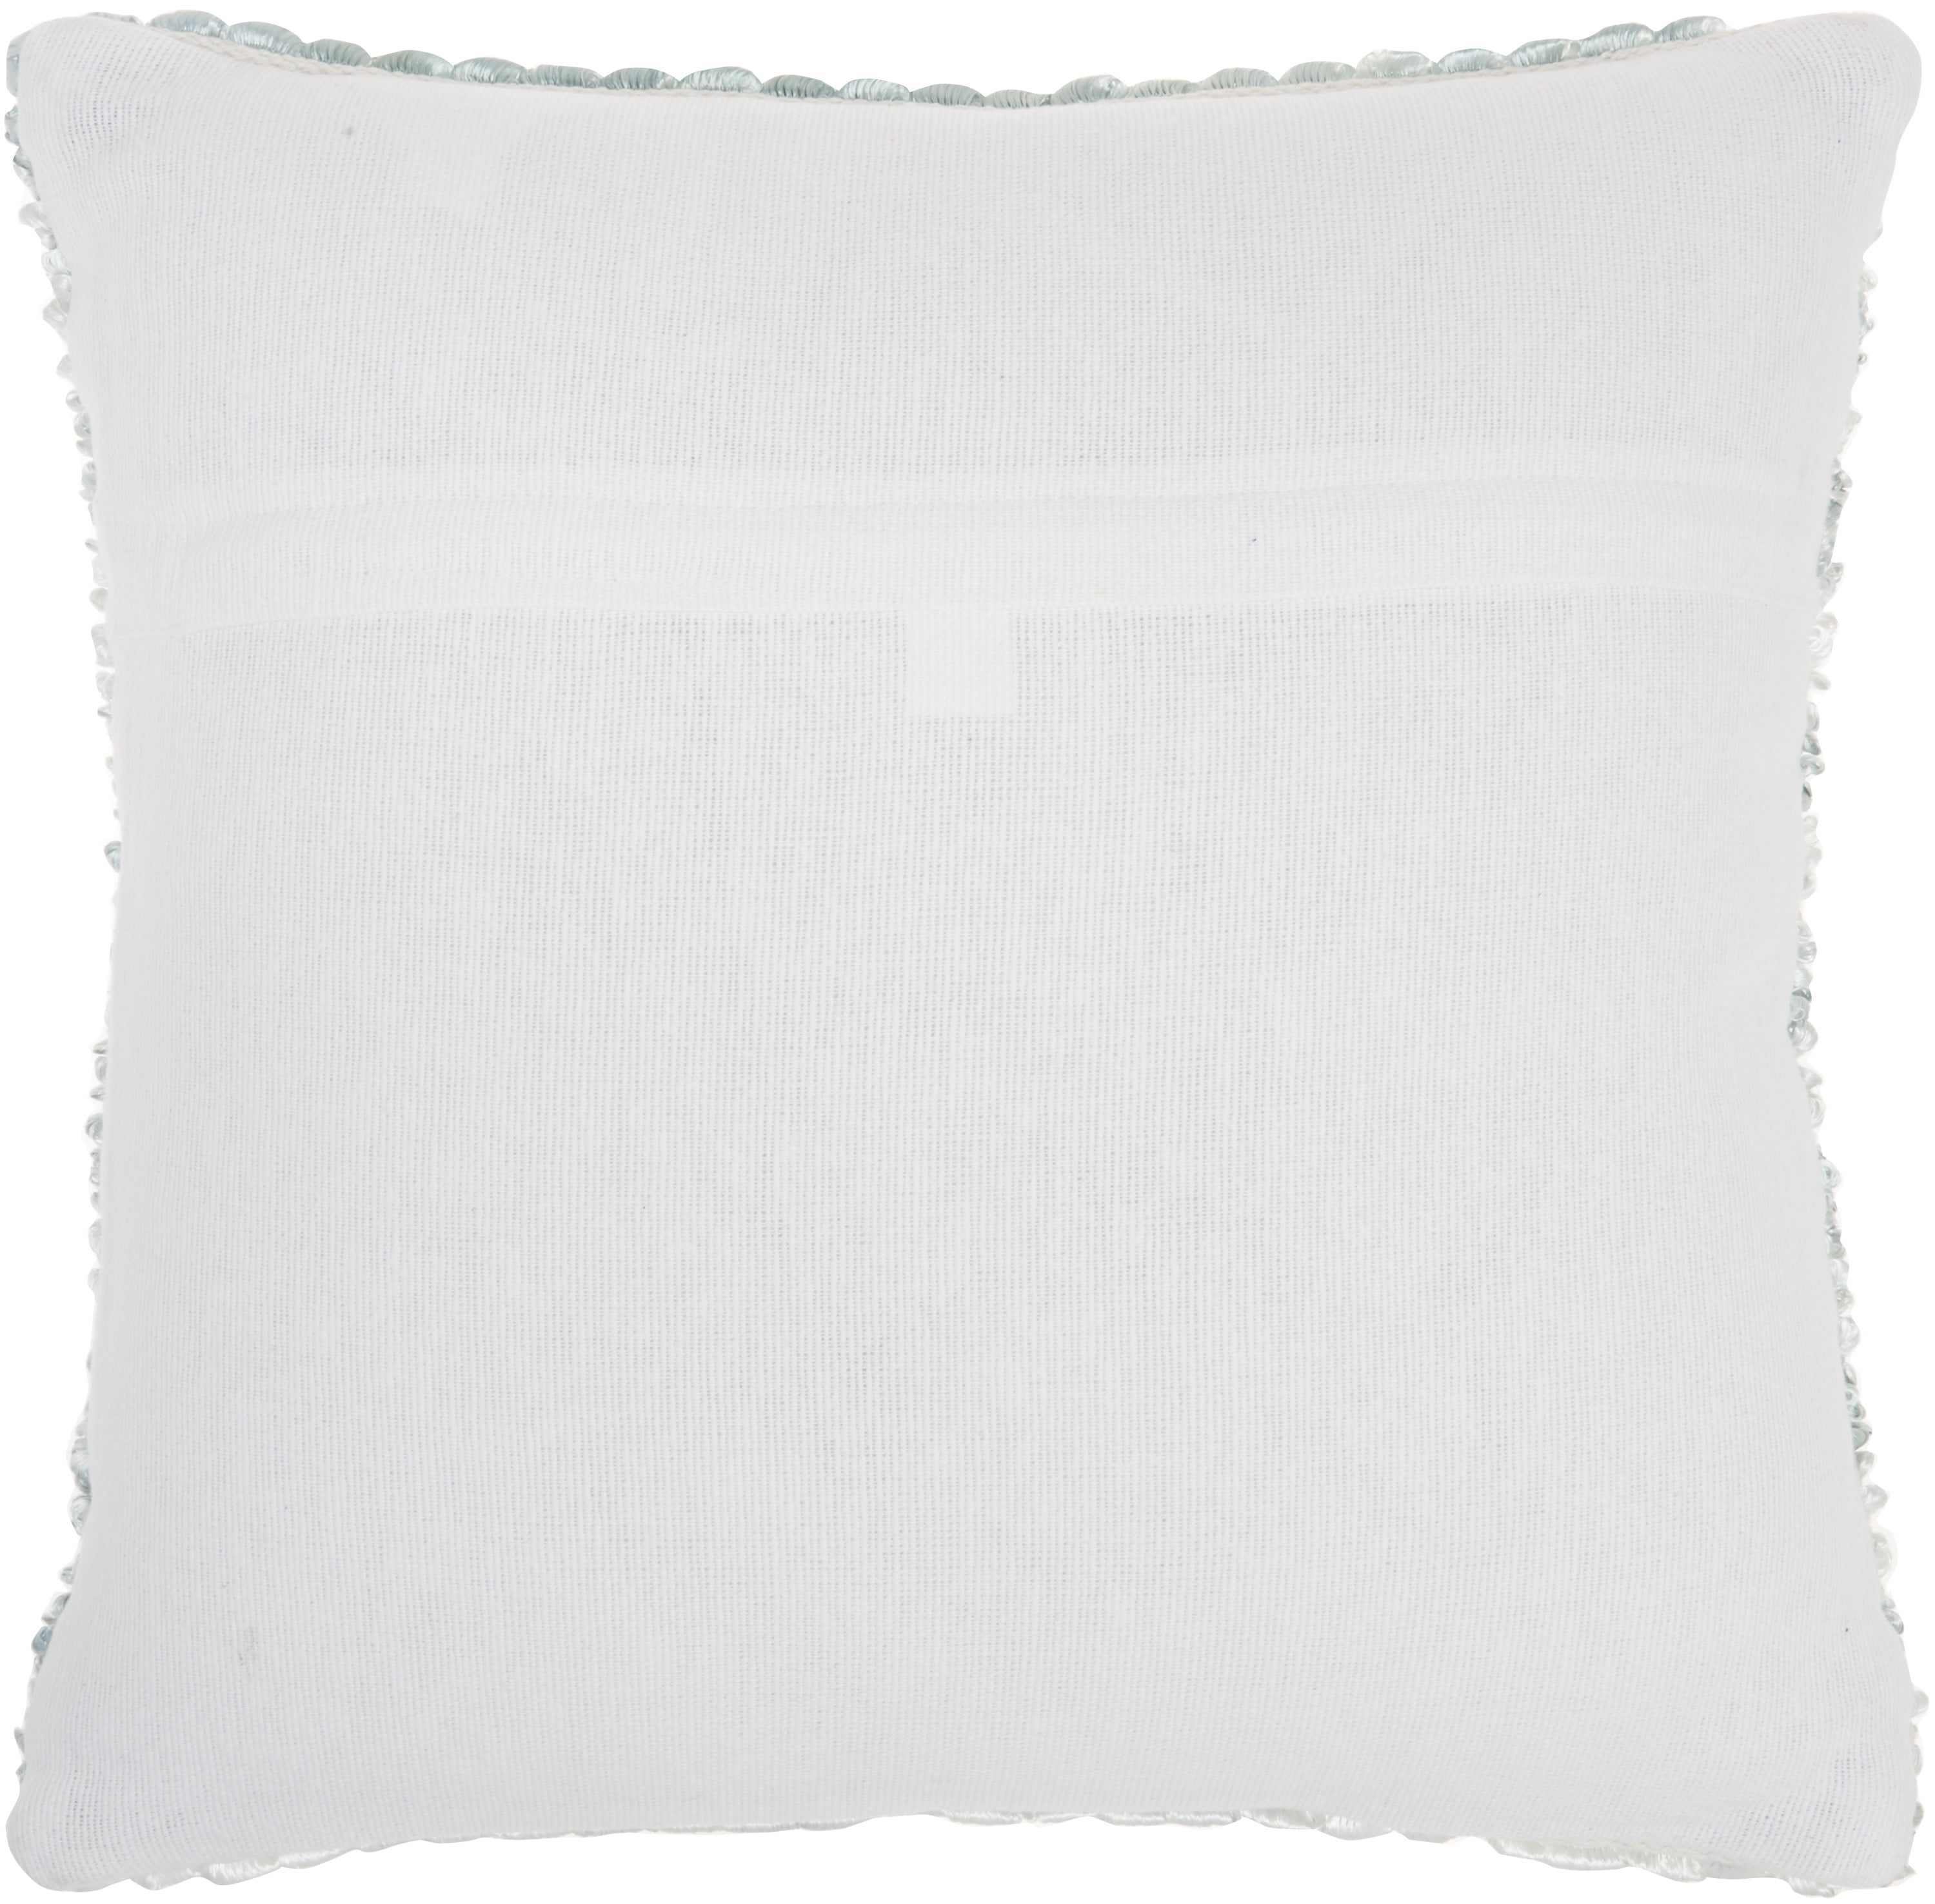 Satin Ribbon – Pillows For Pointes